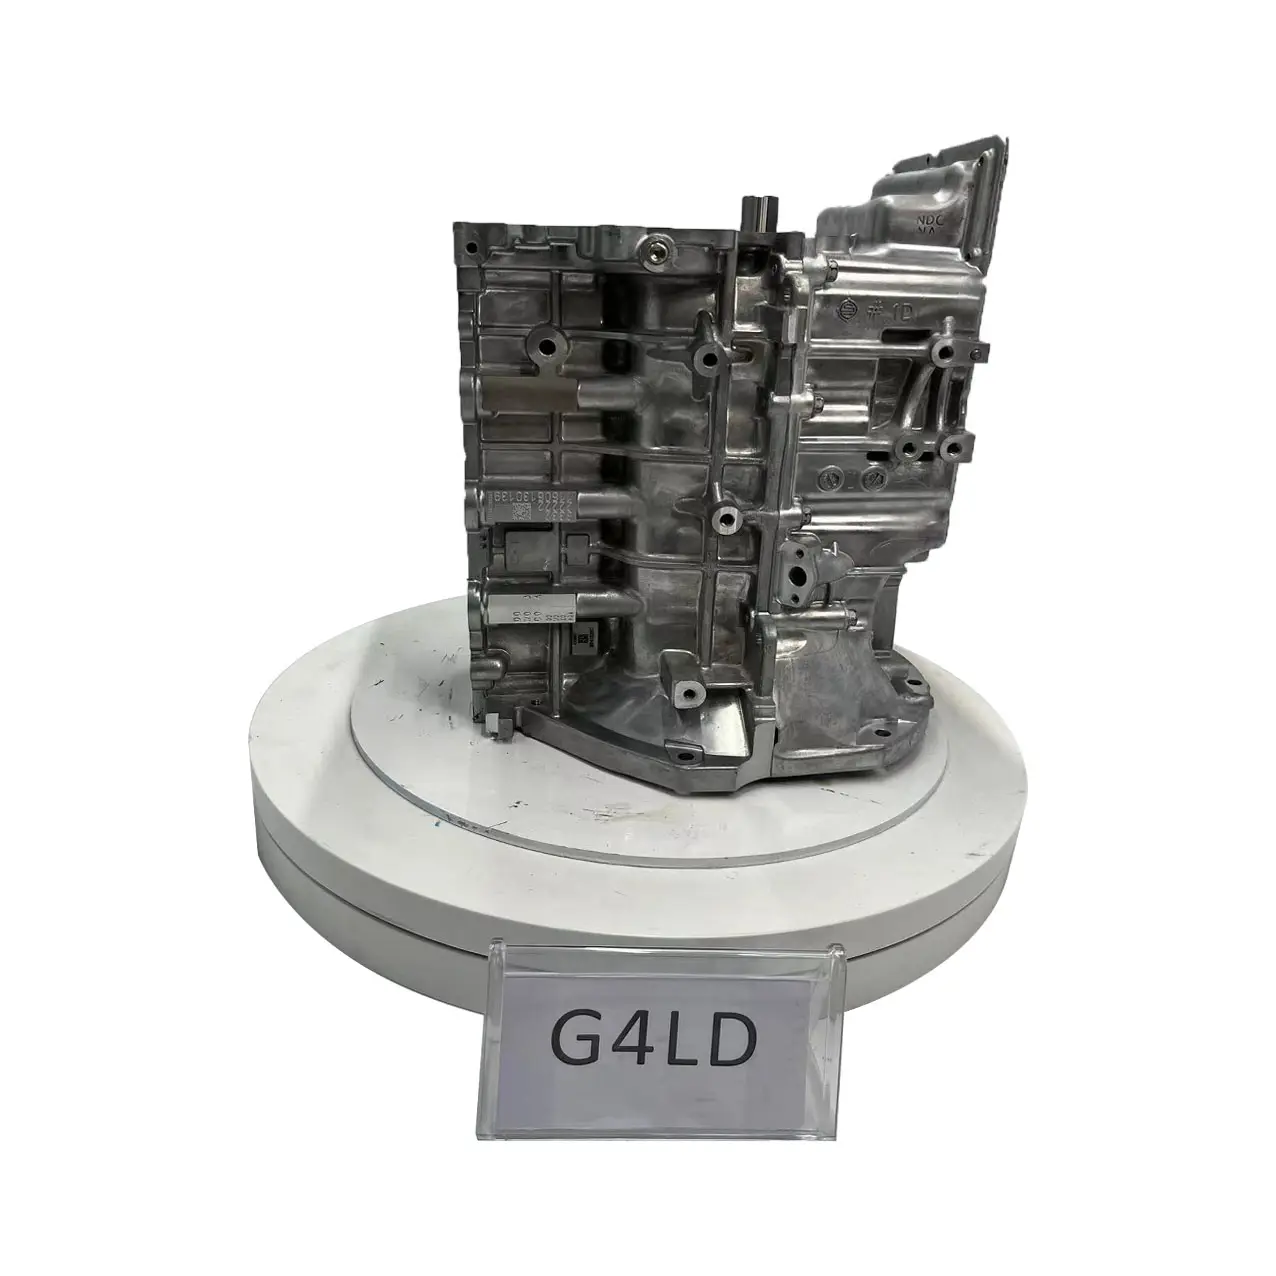 Di alta qualità G4LD 1.4T motore a benzina Short Block per LA FESTA I30 ELANTRA VELOSTER 1.4L ingegneria gruppo motore auto